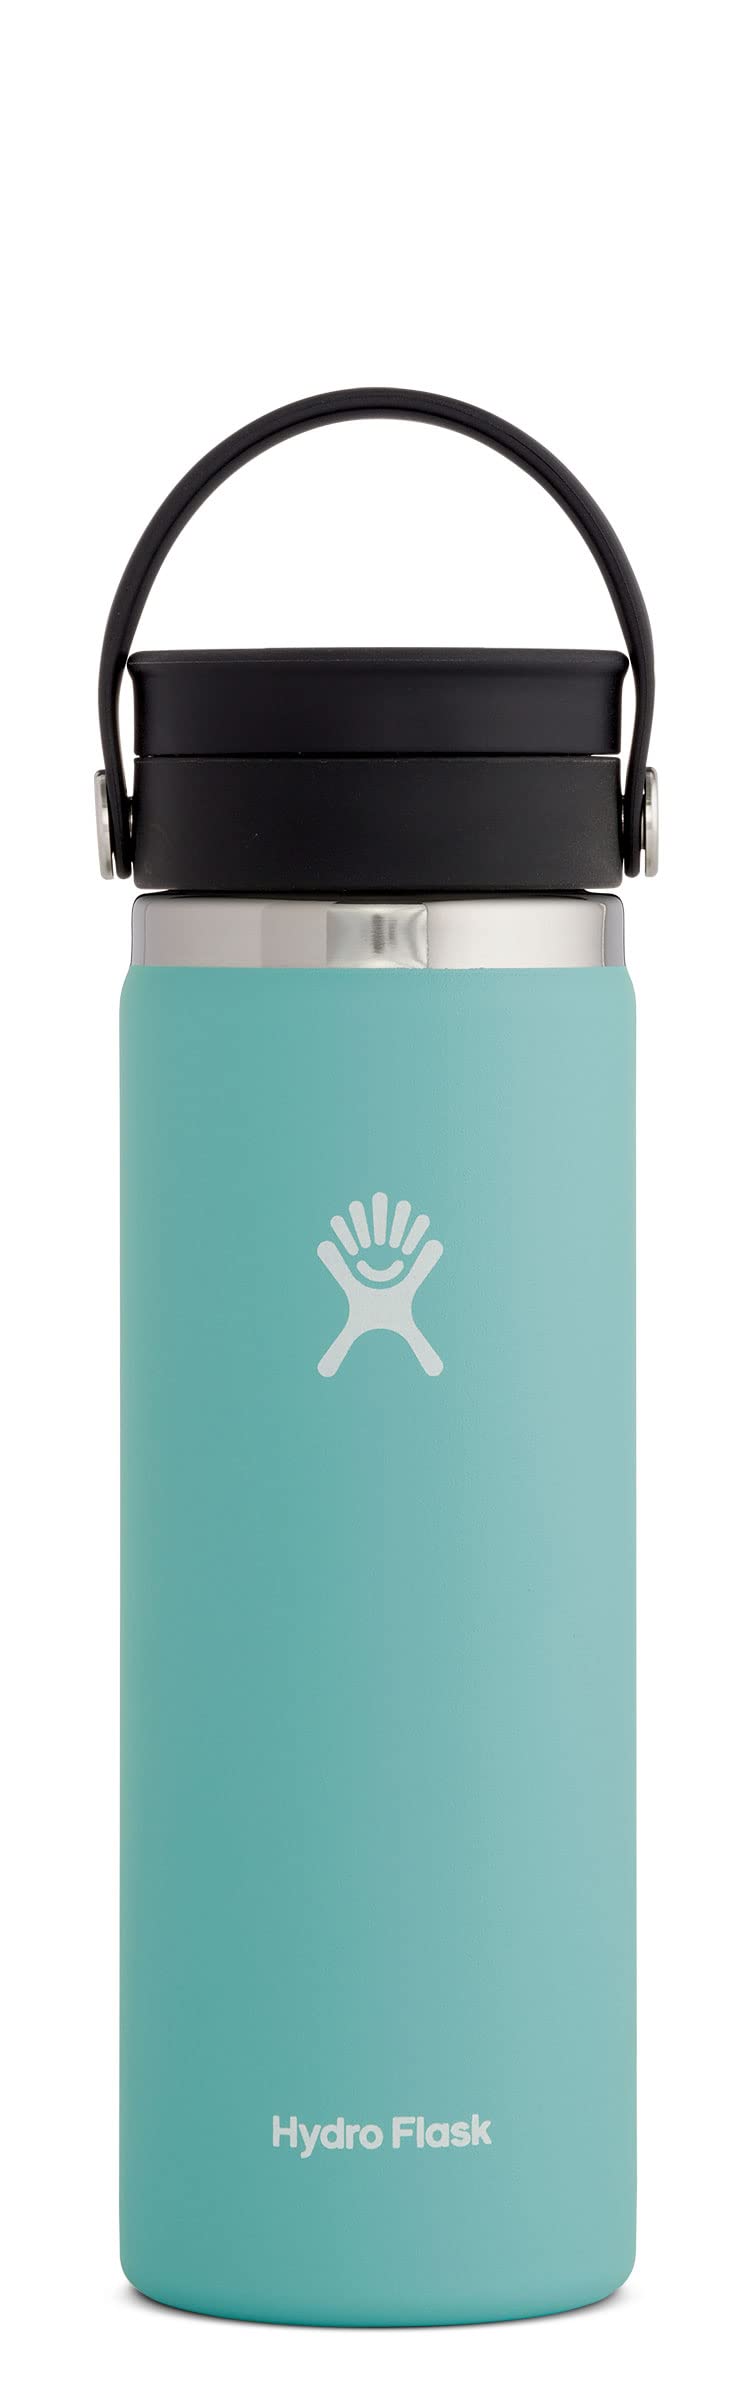 Hydro Flask Бутылка на 20 унций с широким горлышком и гибкой крышкой Alpine